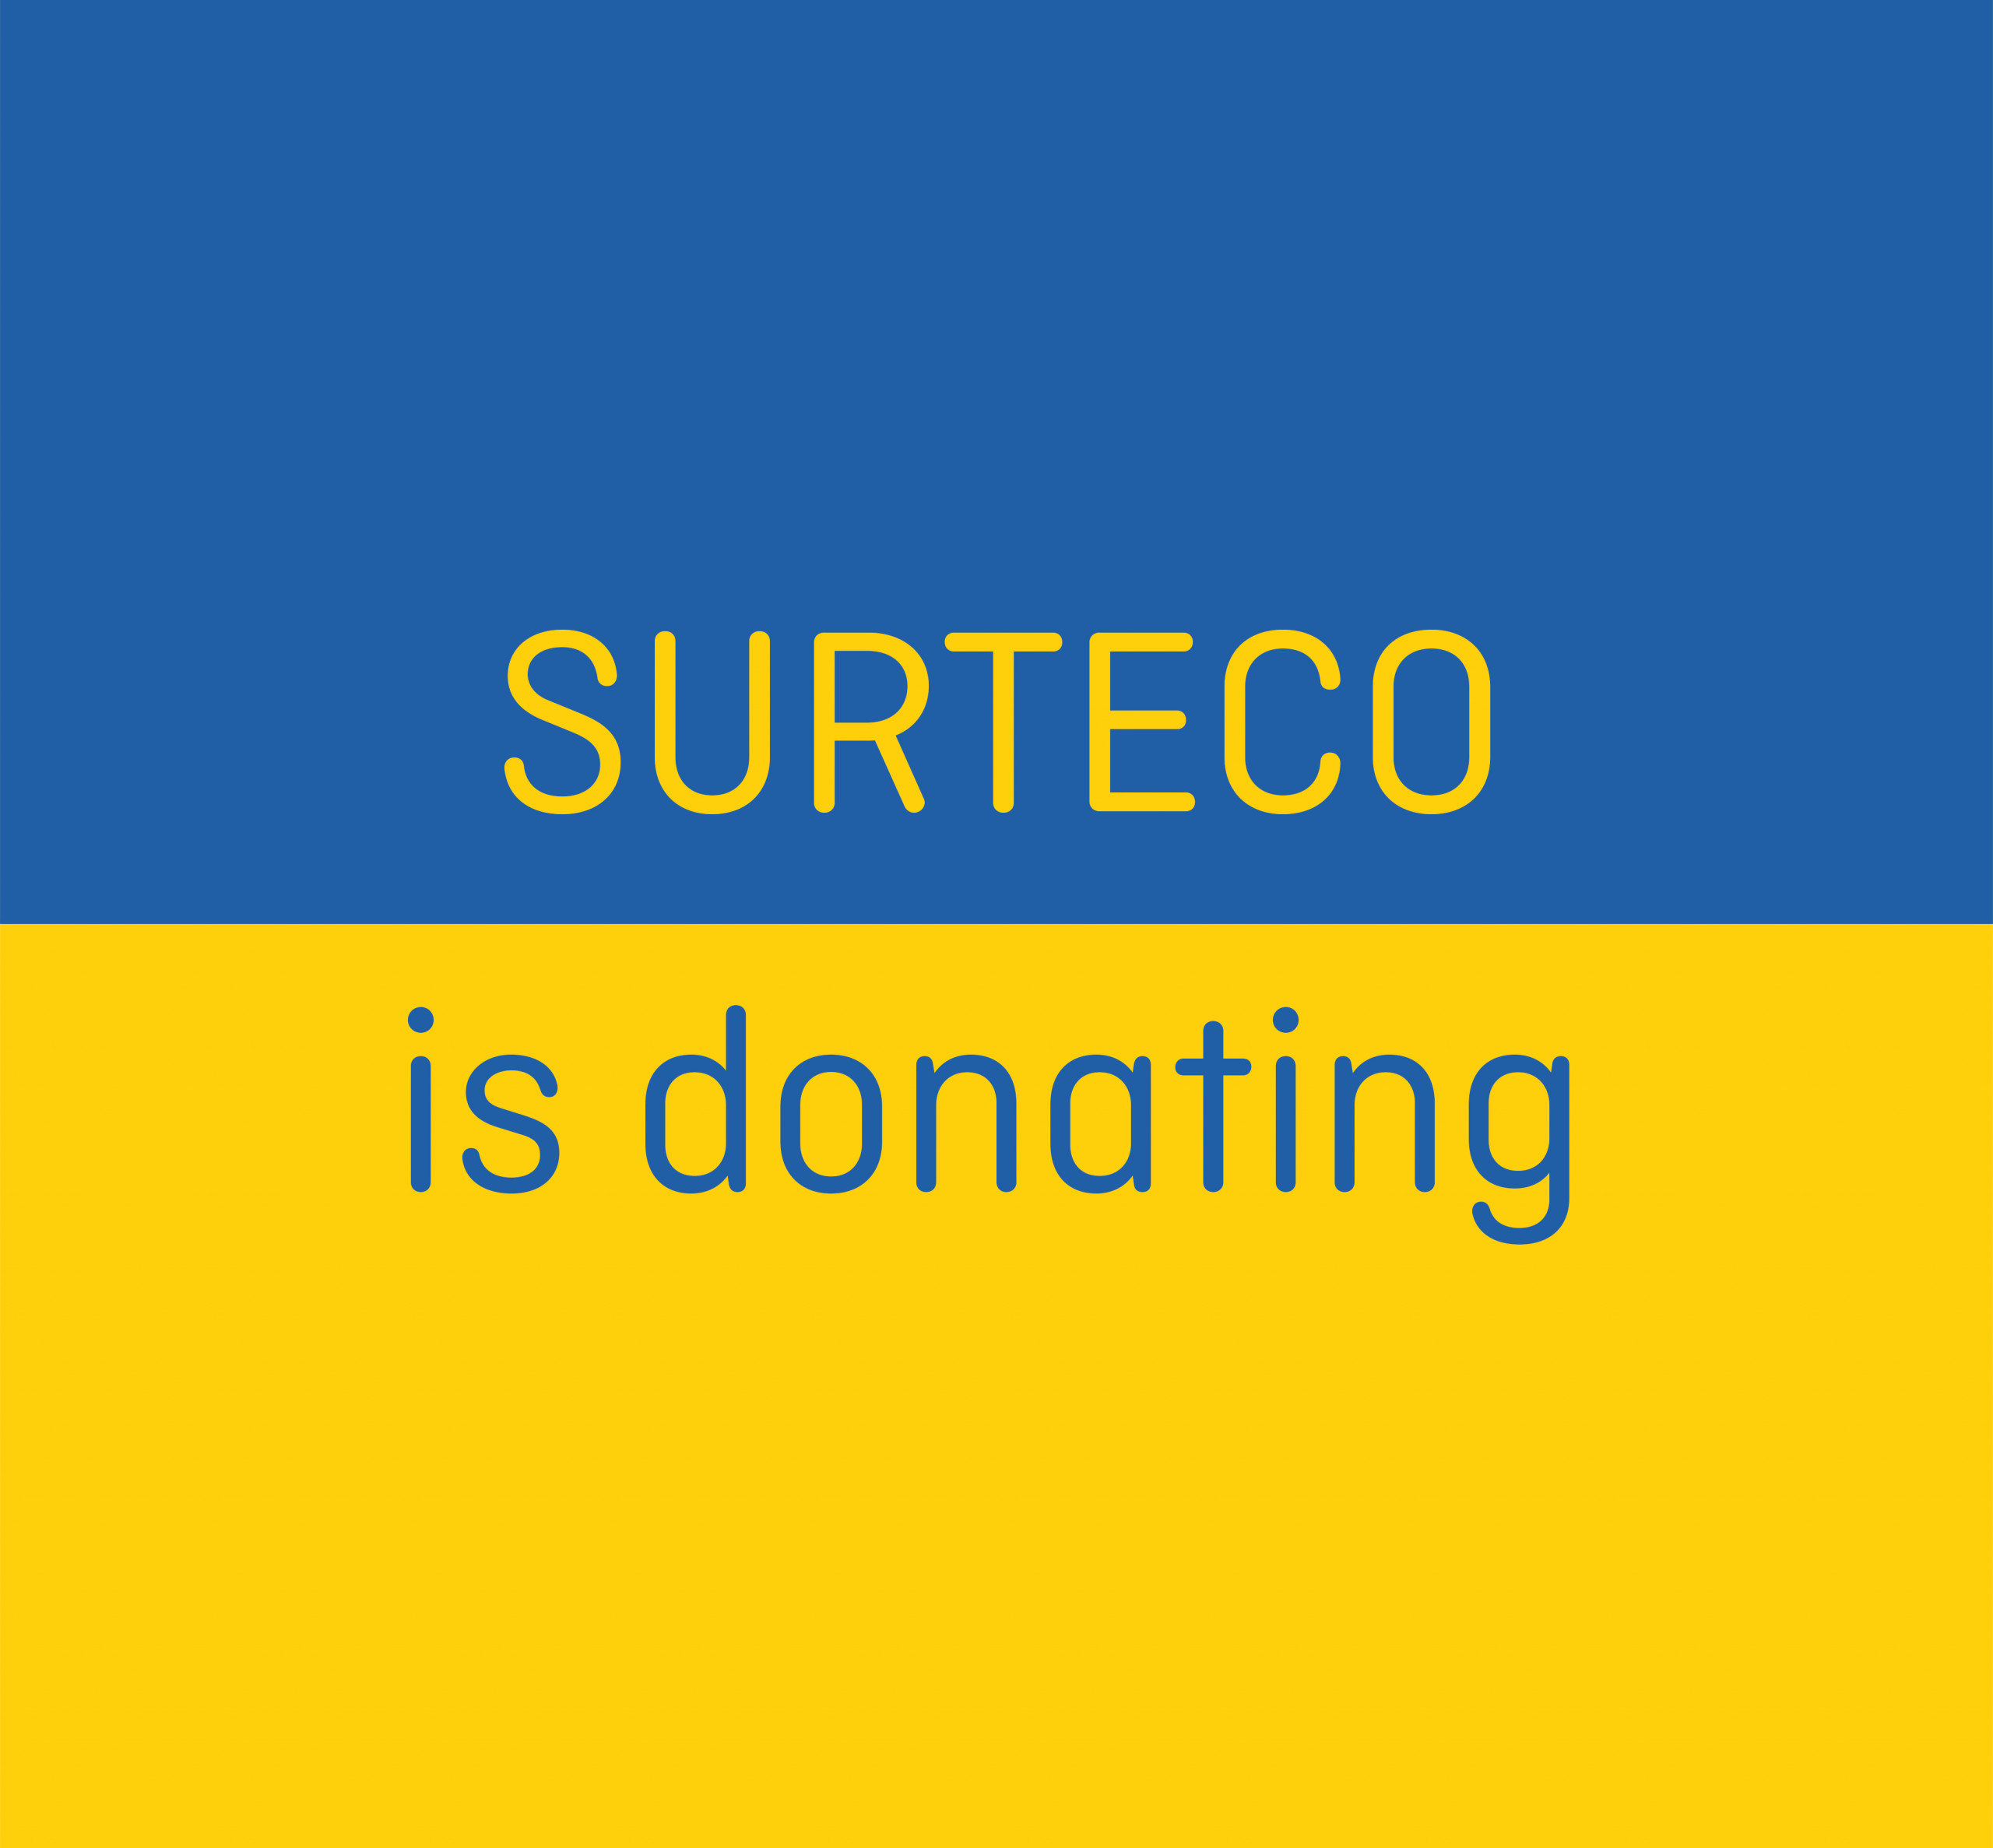 SURTECO is donating to the Ukrainian citizens